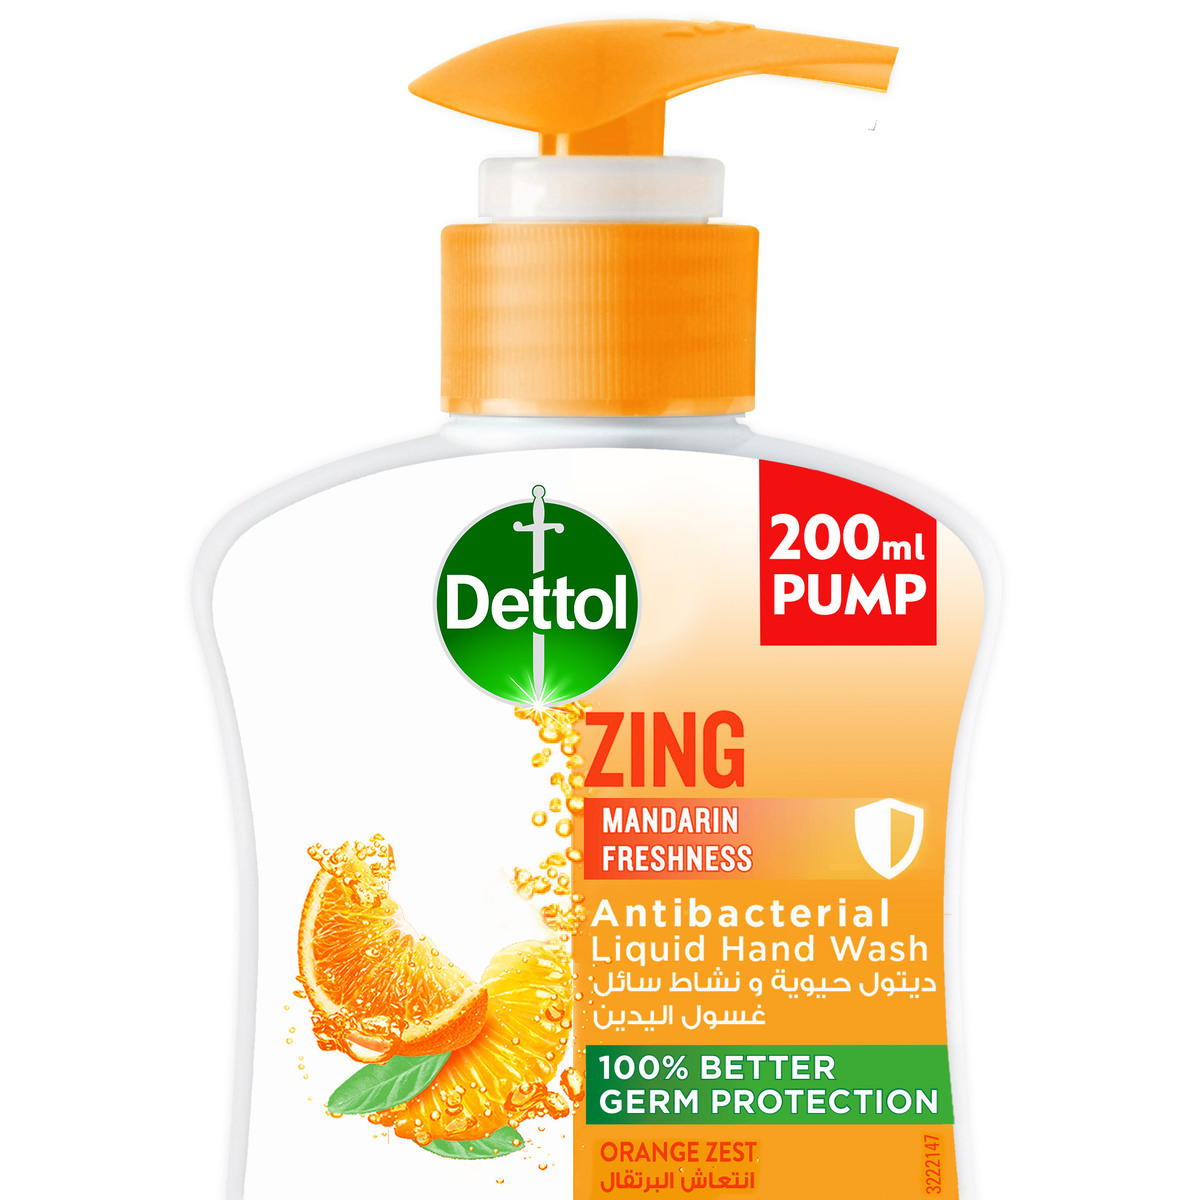 Dettol Zing Mandarin Freshness Liquid Hand Wash Orange Zest Fragrance 200 ml